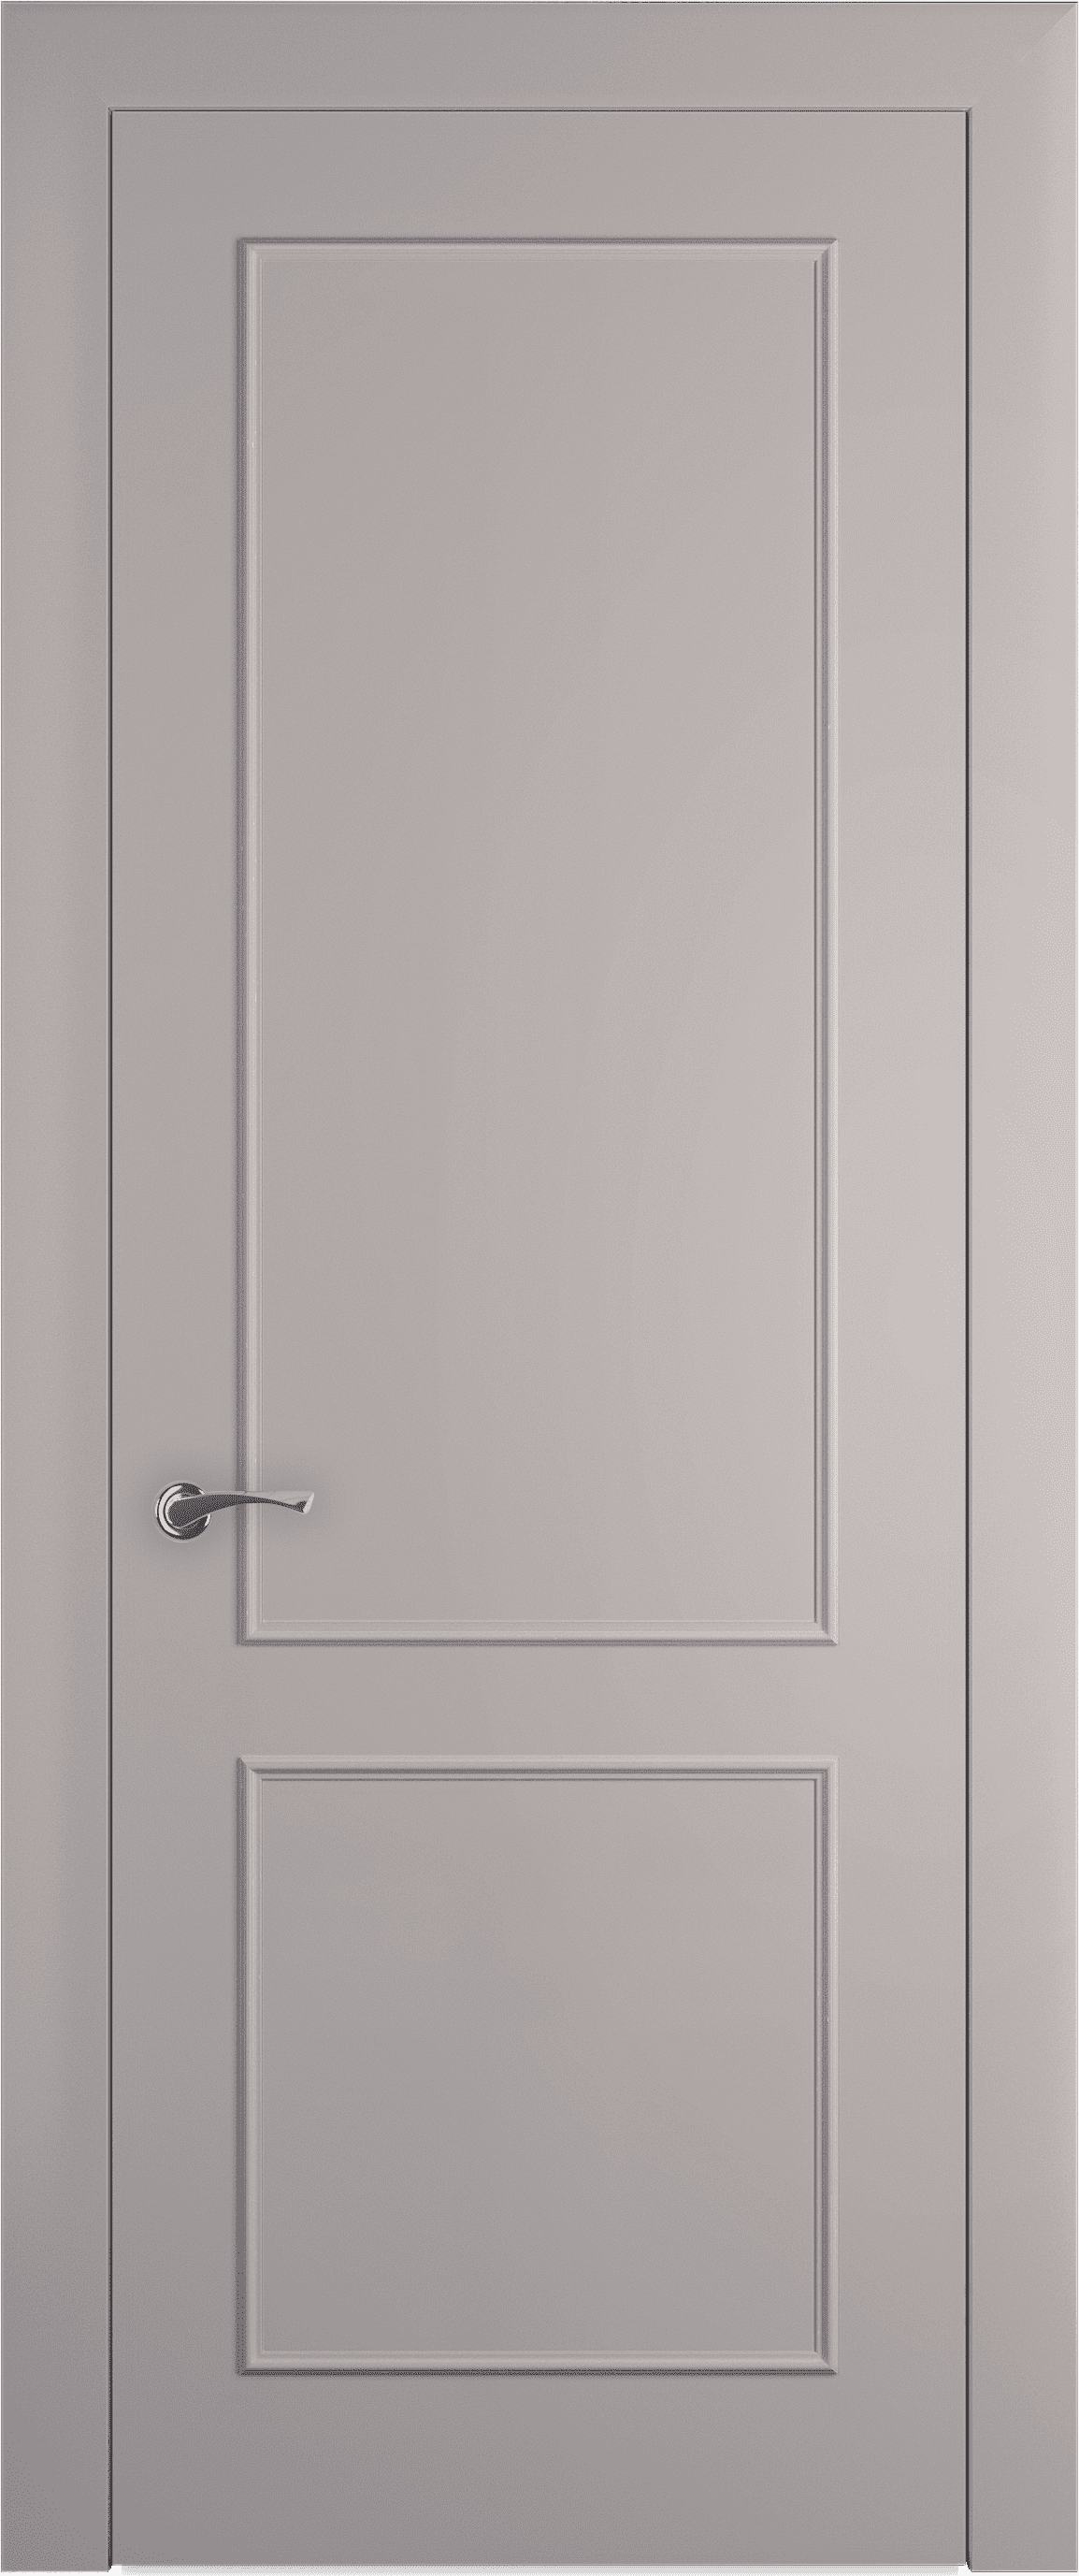 Межкомнатная дверь Классика багет 8